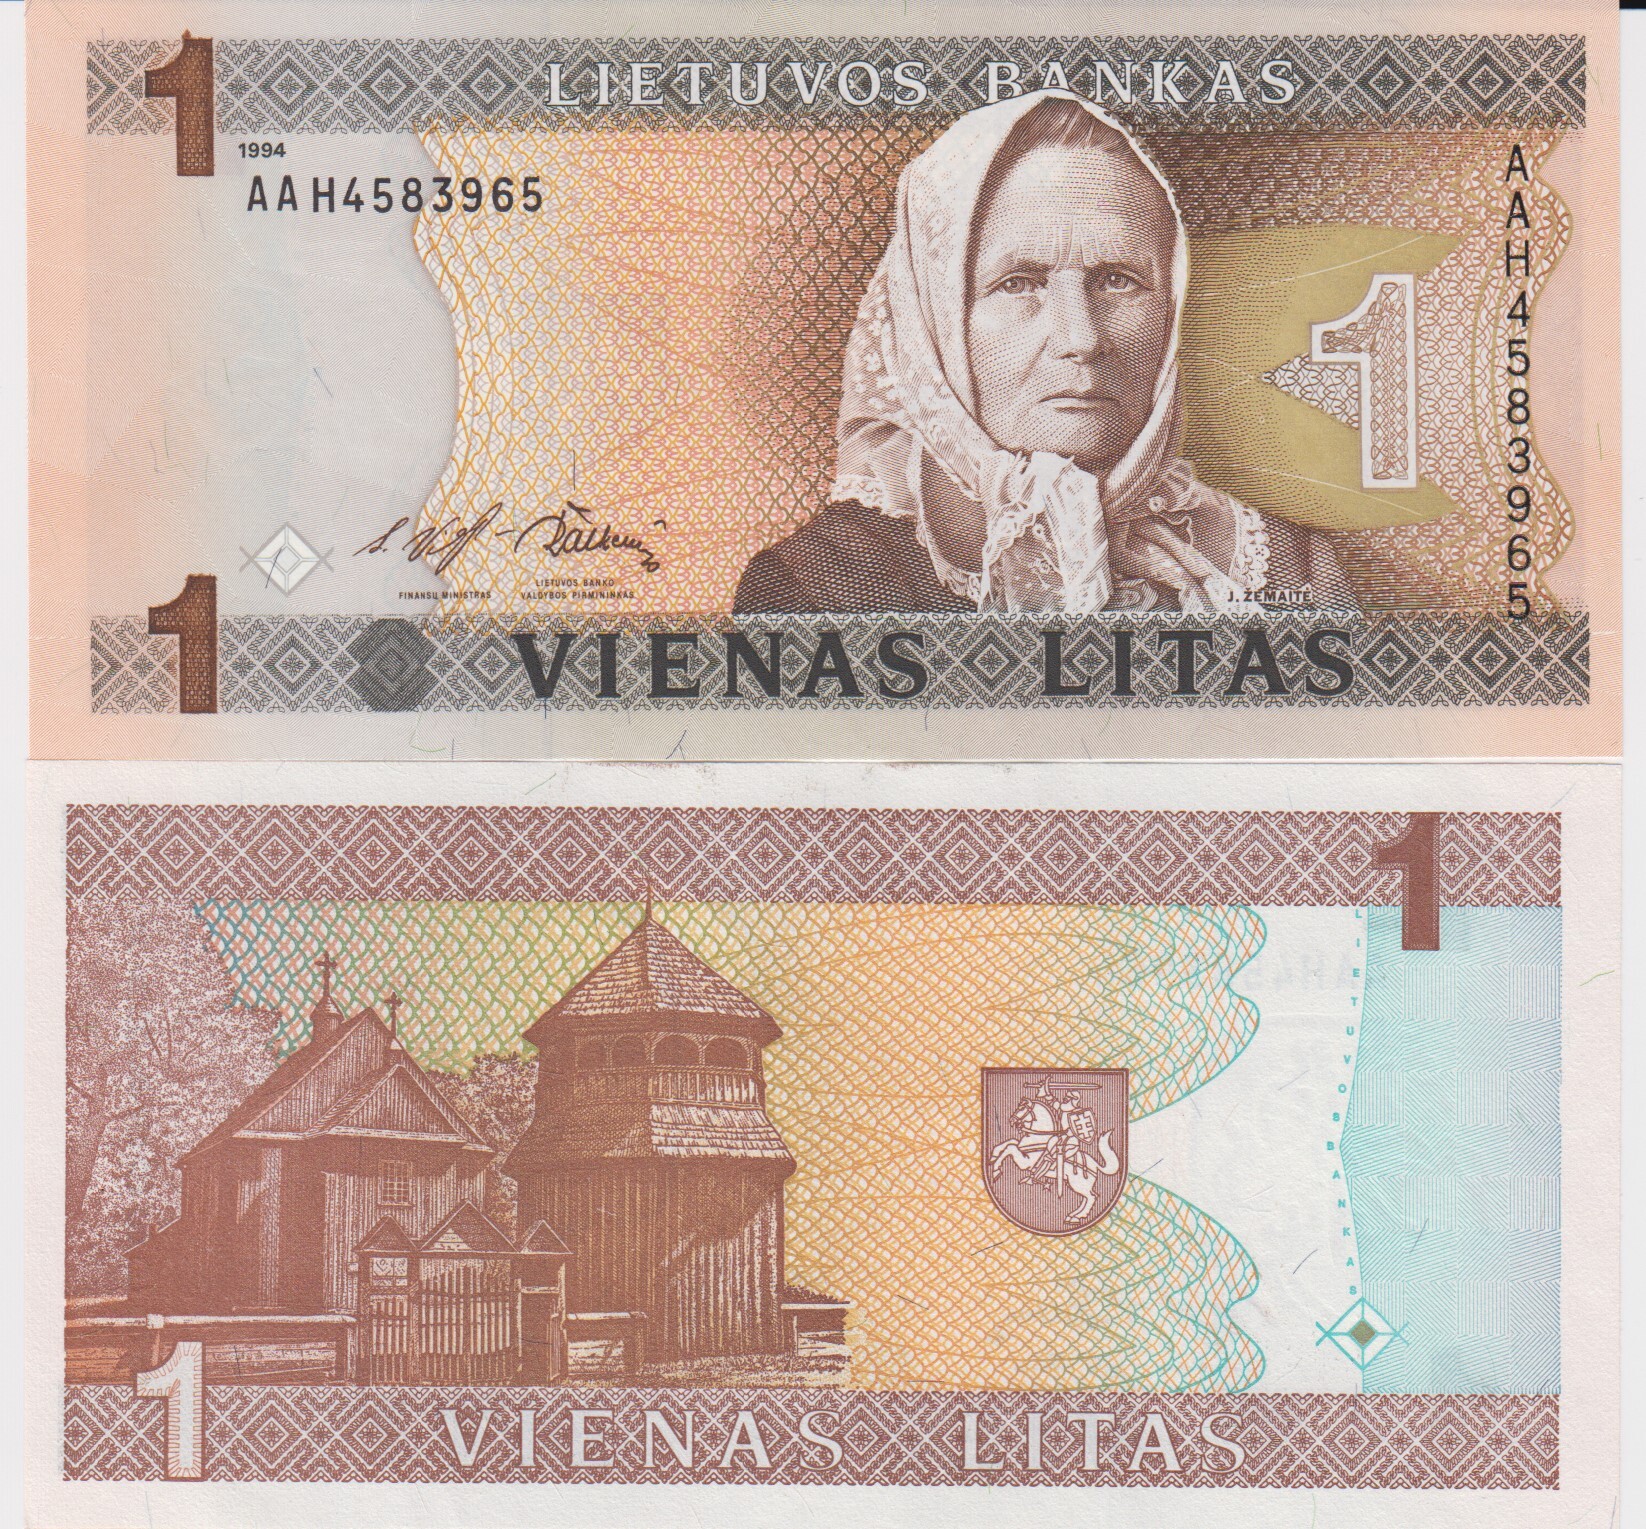 Lithuania 1 Litas 1994 P-53 Banknotes UNC 